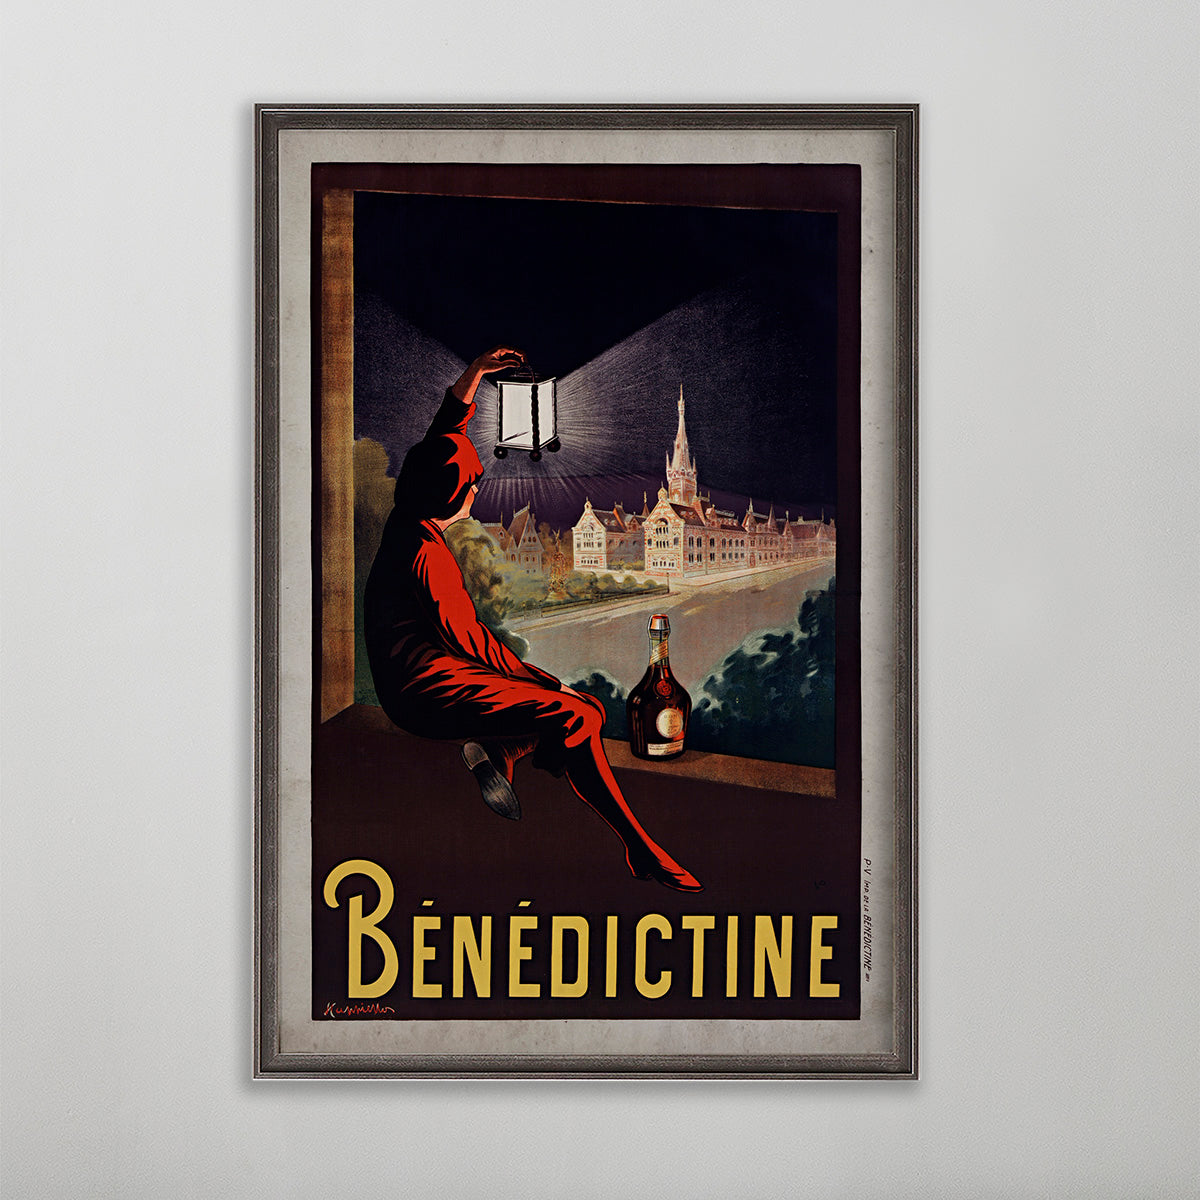 benedictine poster wall art by leonetto cappiello. boy in pajamas holding lantern.